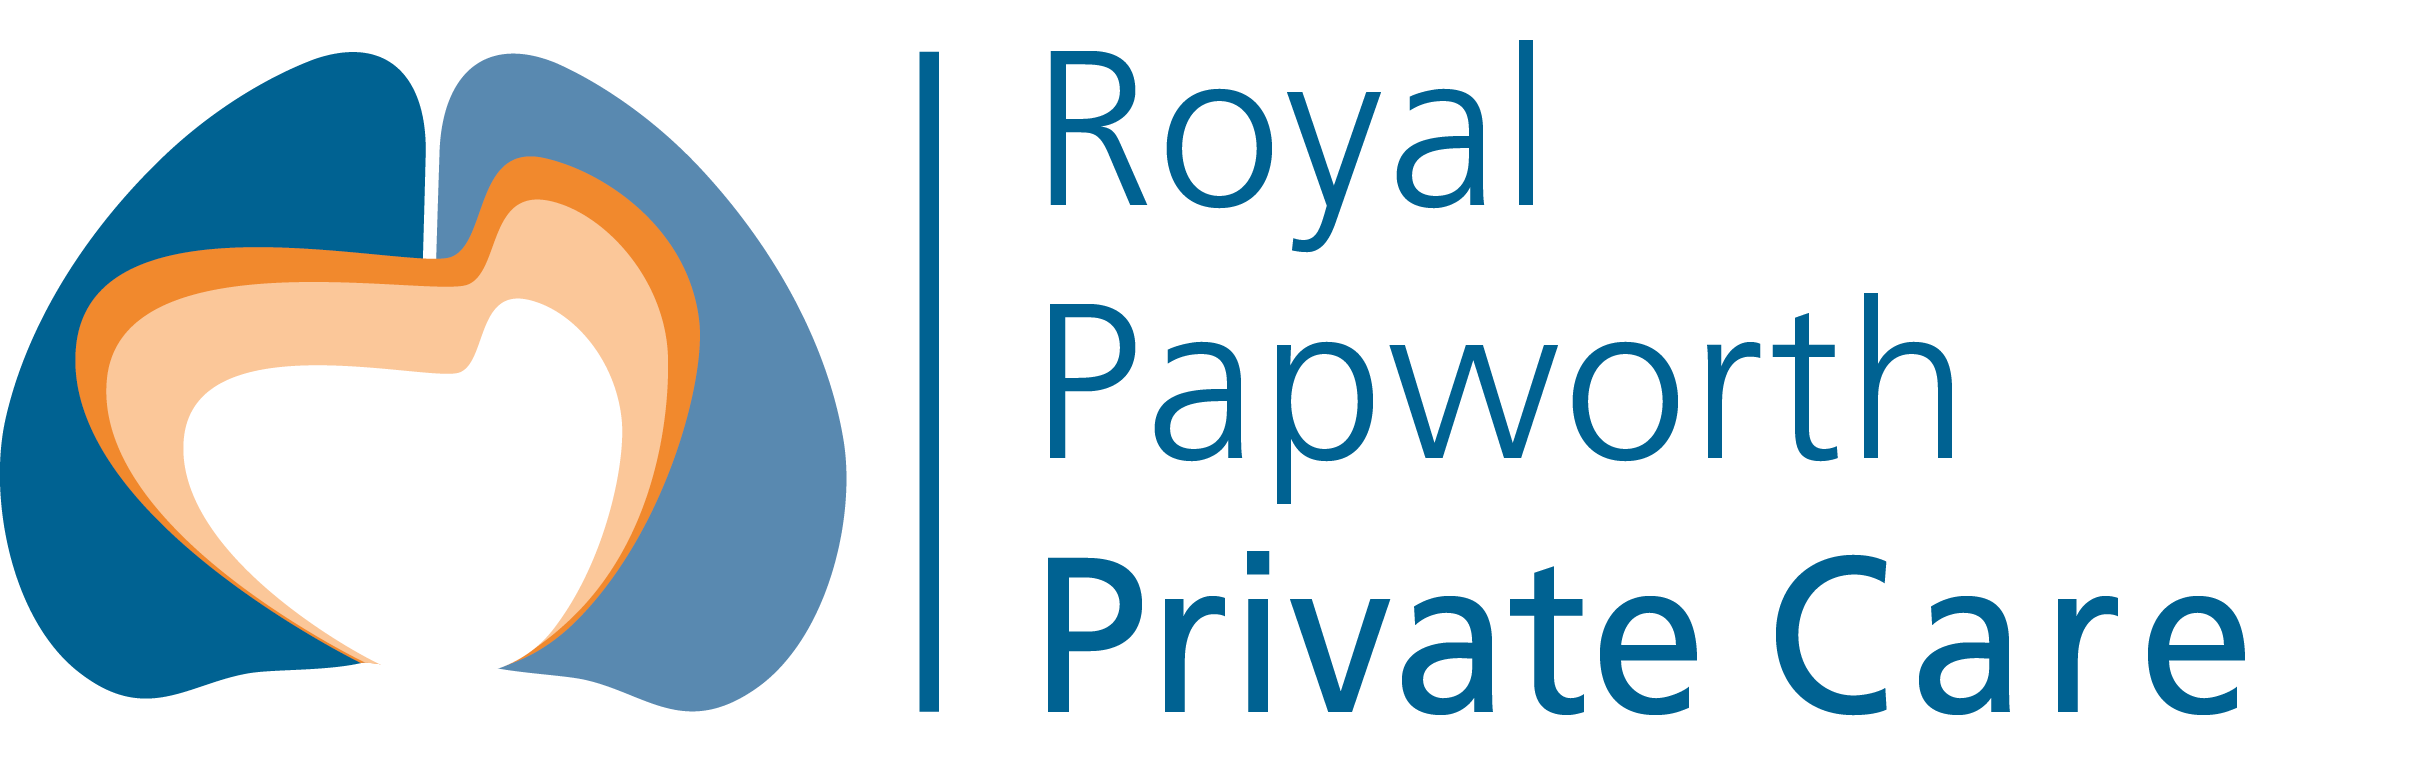 Private Care Logo - Private Care :: Royal Papworth Hospital